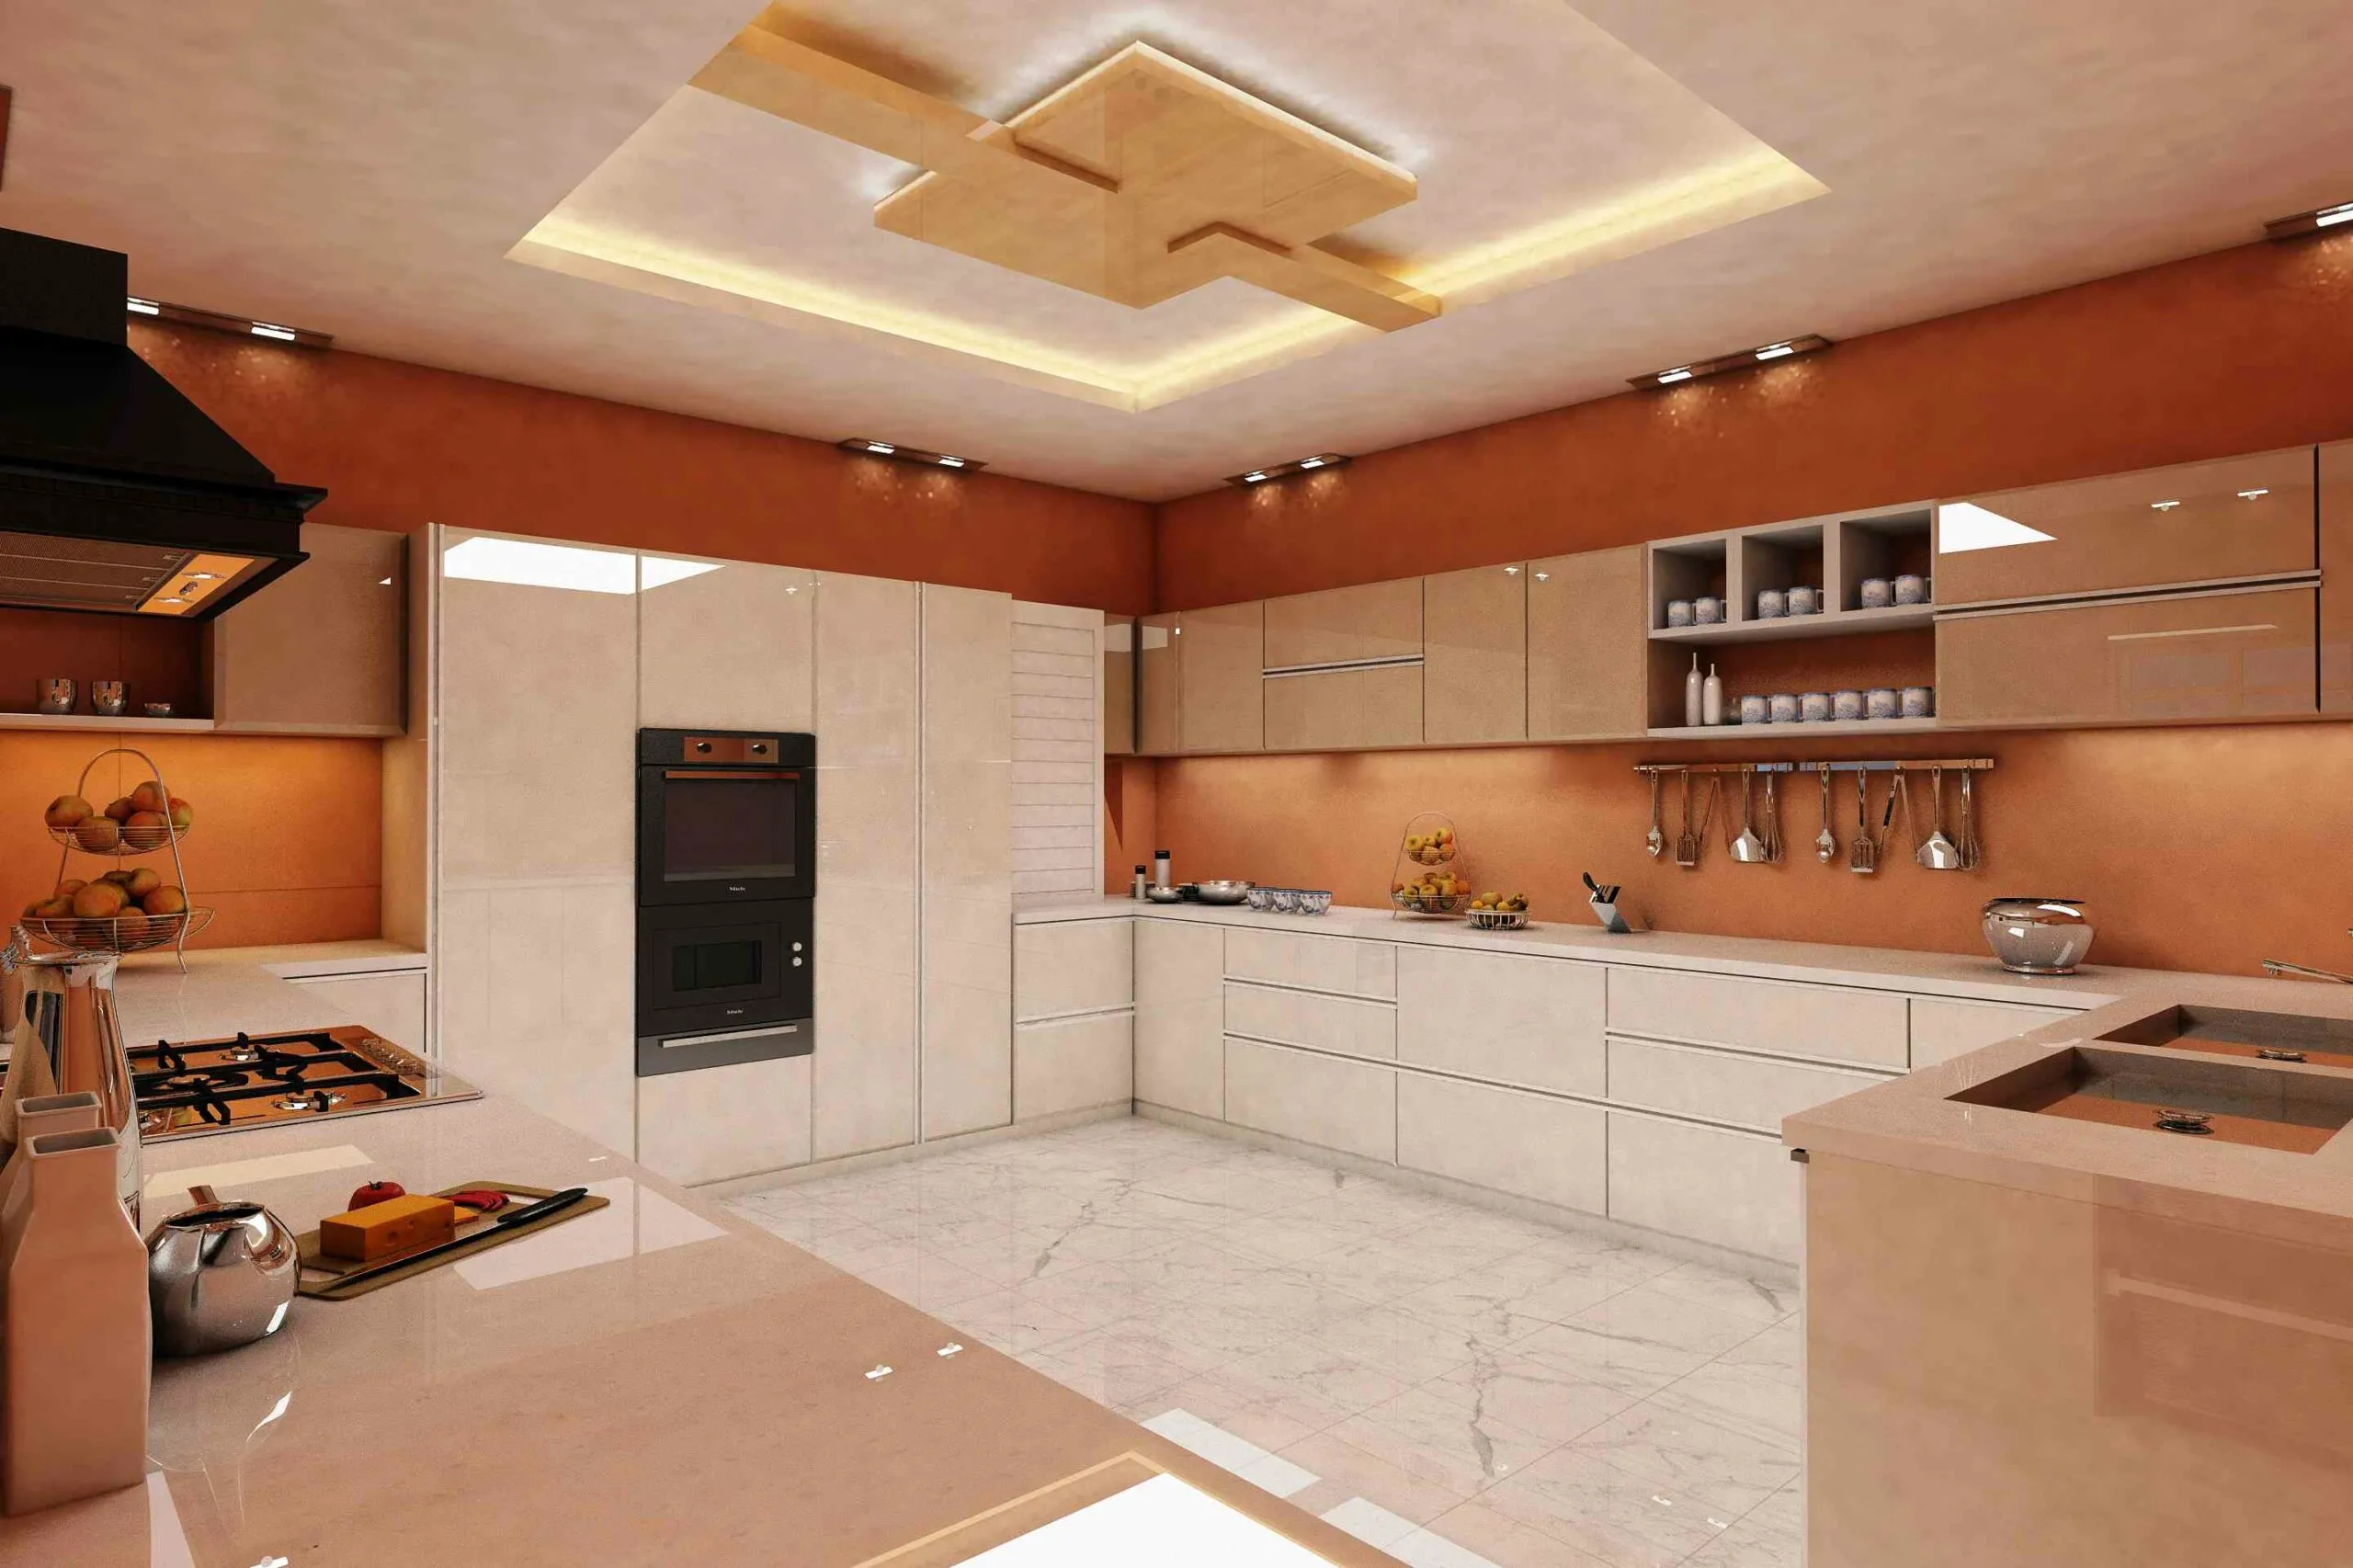 stylish beige kitchen house design designed by Top best interior decorators, designers & architectural firms in Jaipur